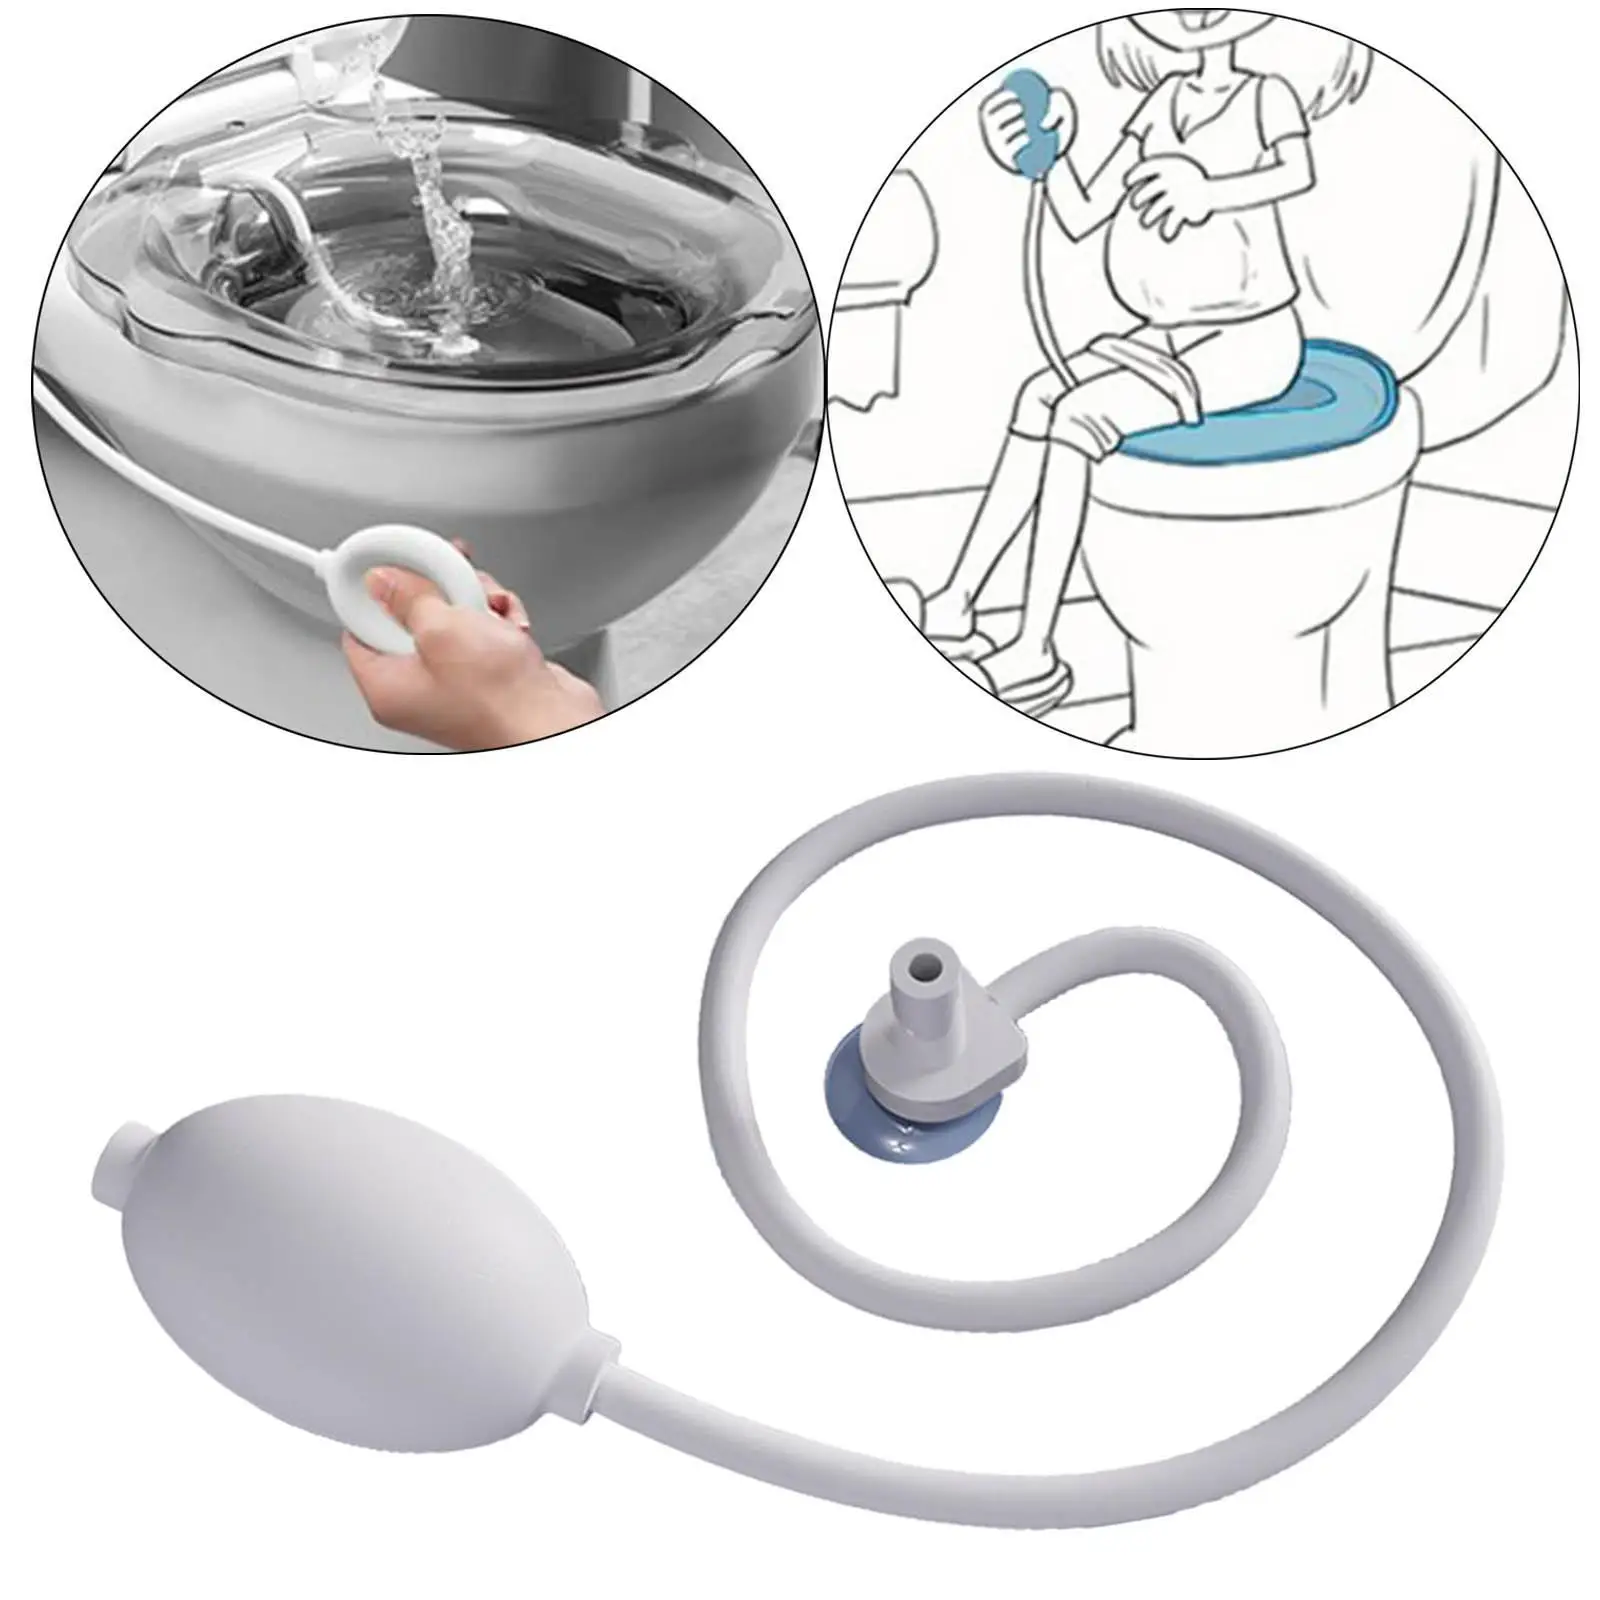 Sitz Bath Flusher Perineal Soaking Bath Cleaning Soaking Bidet Flusher for Toilet Seat Bidet Toilet Pregnant Women Hemorrhoid